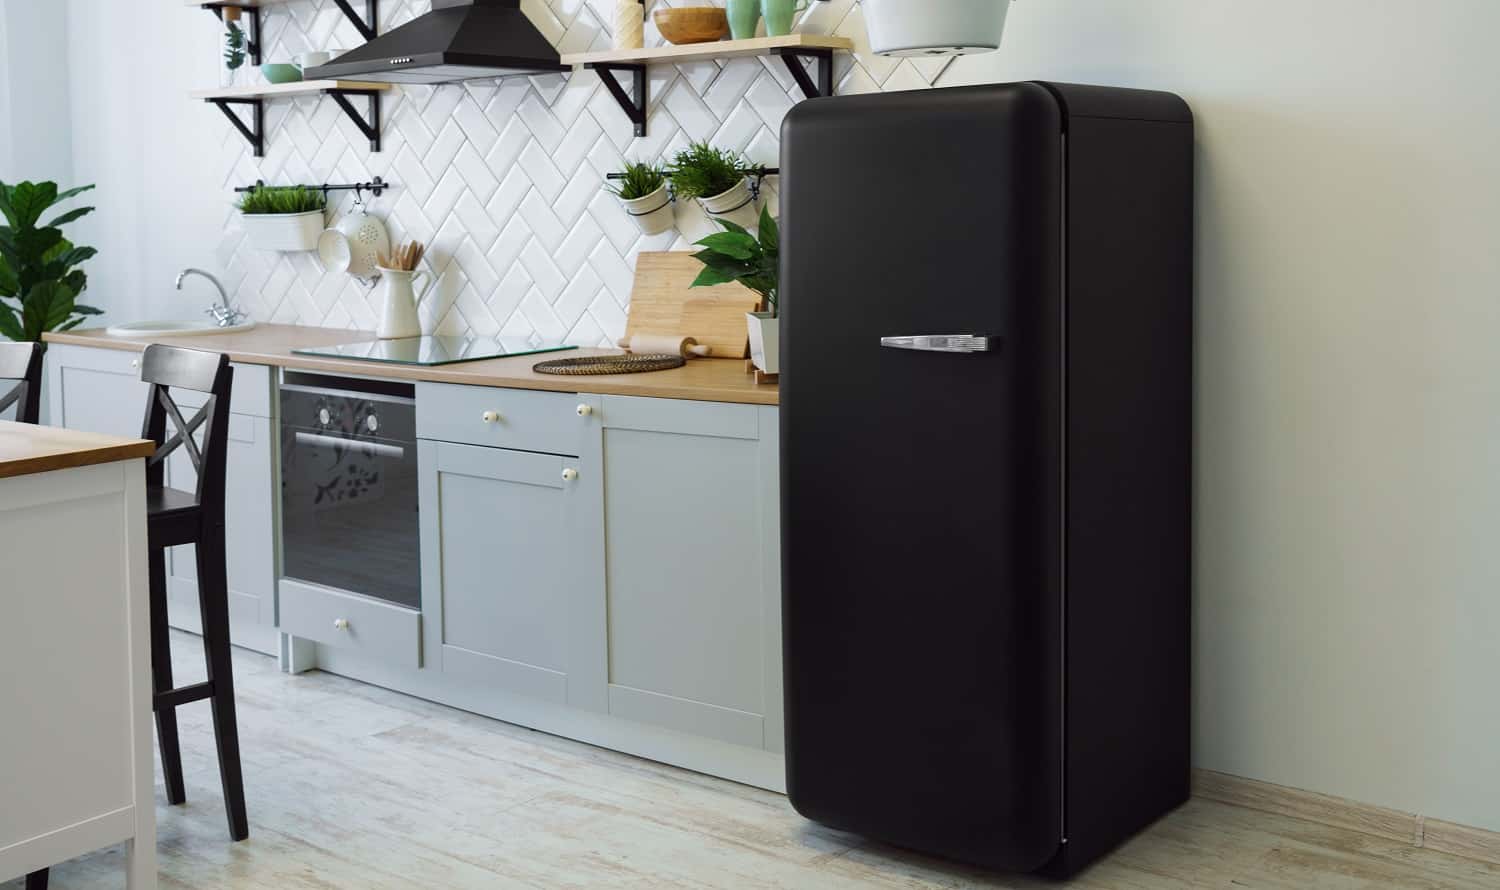 Retro black fridge in gray wooden kitchen